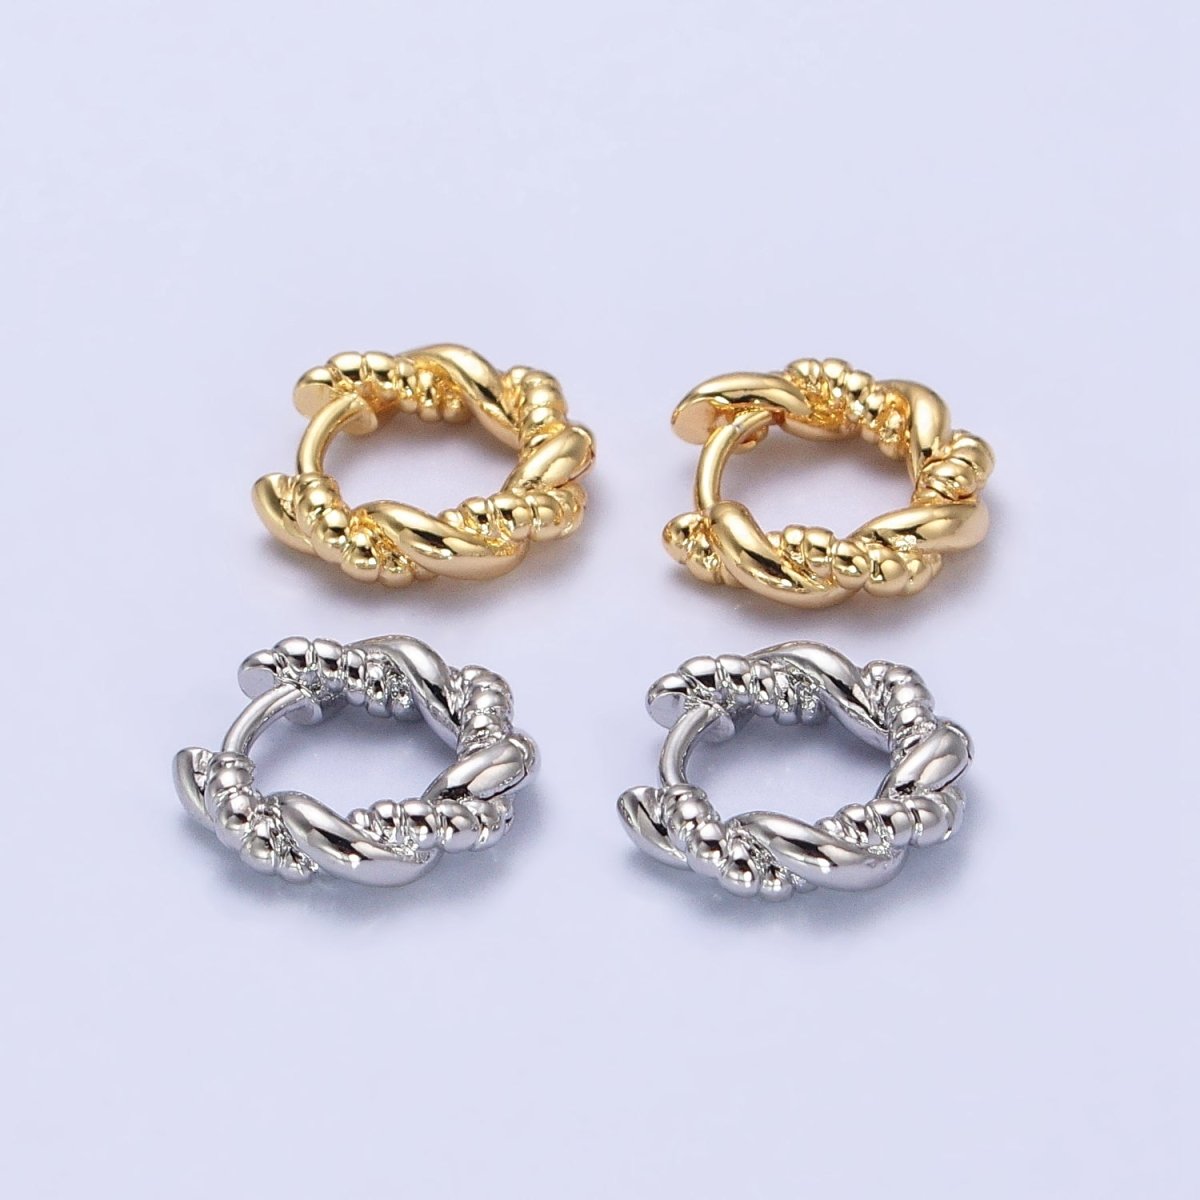 Gold, Silver Twisted Rope Croissant 12mm Huggie Hoop Earrings | AB551 AB552 - DLUXCA